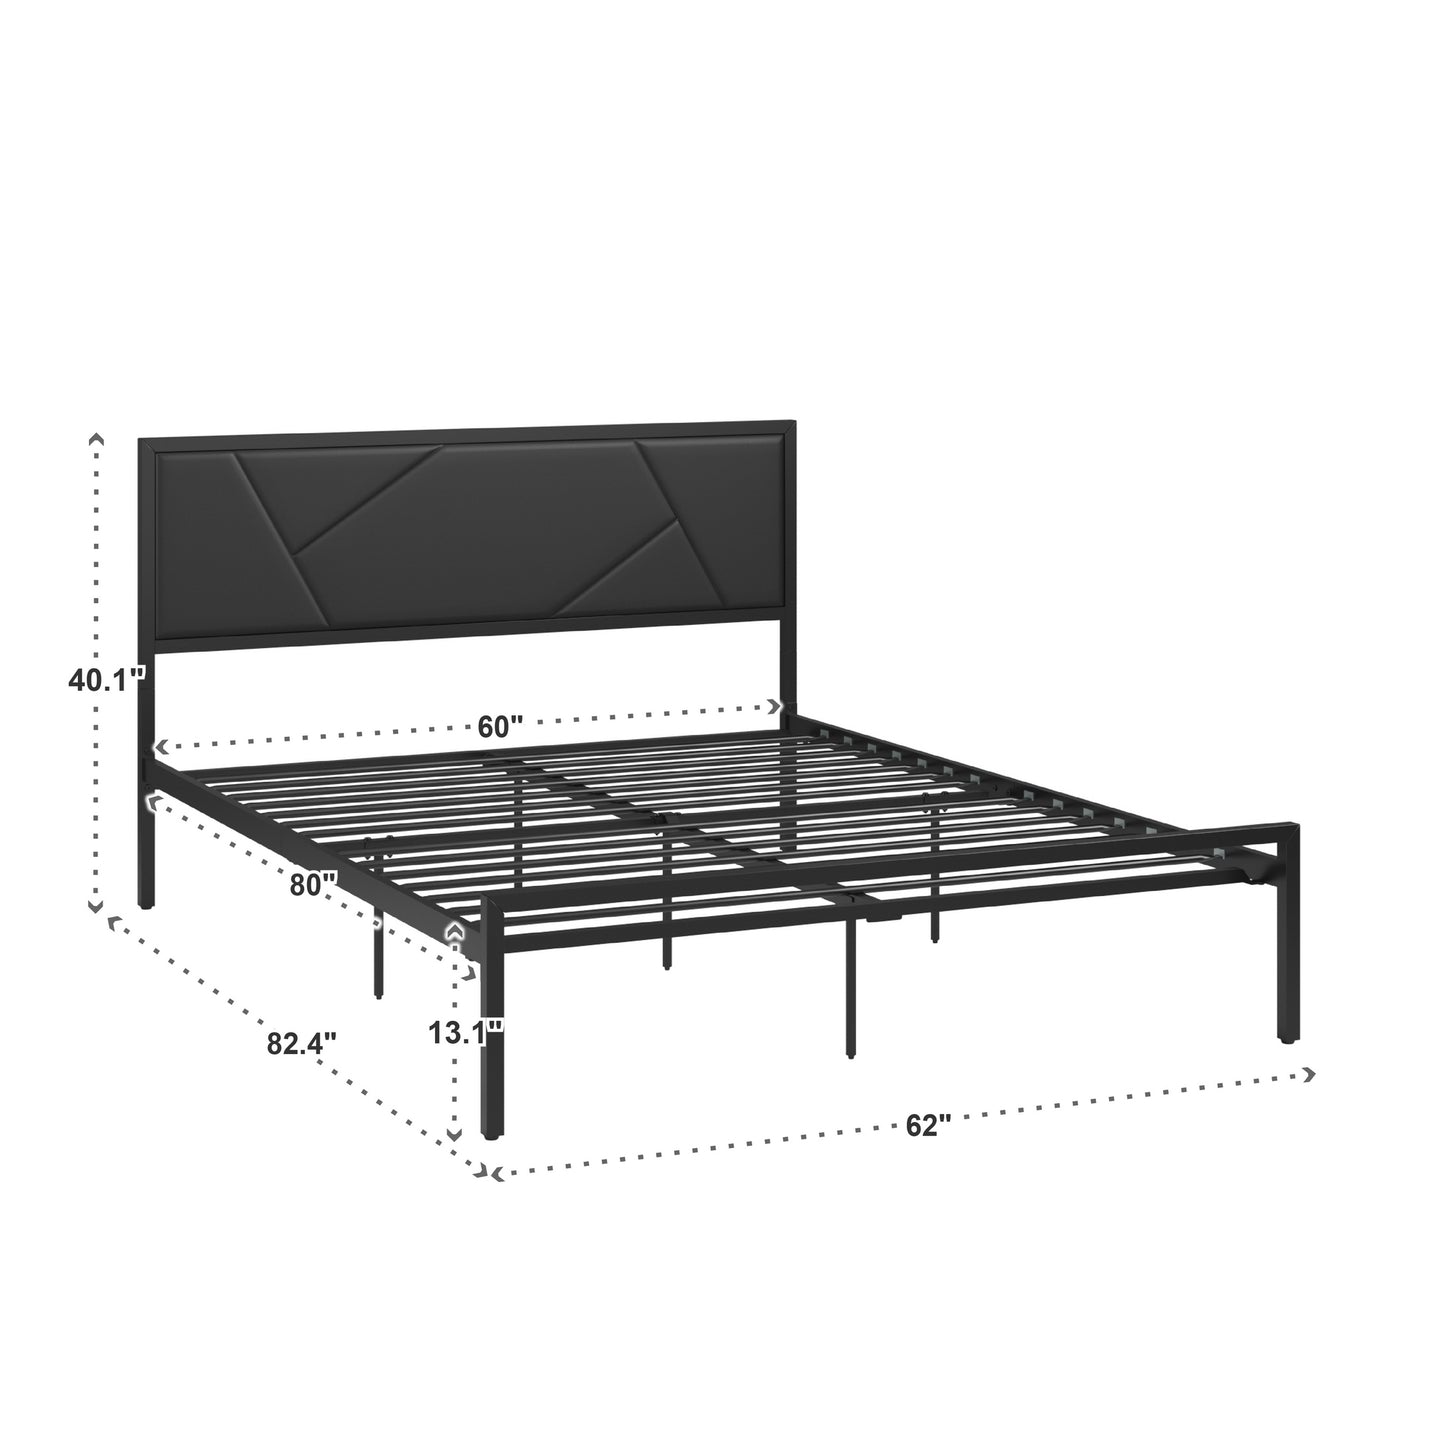 Metal Platform Bed with Geometric Headboard - Black Finish, Queen (Queen Size)